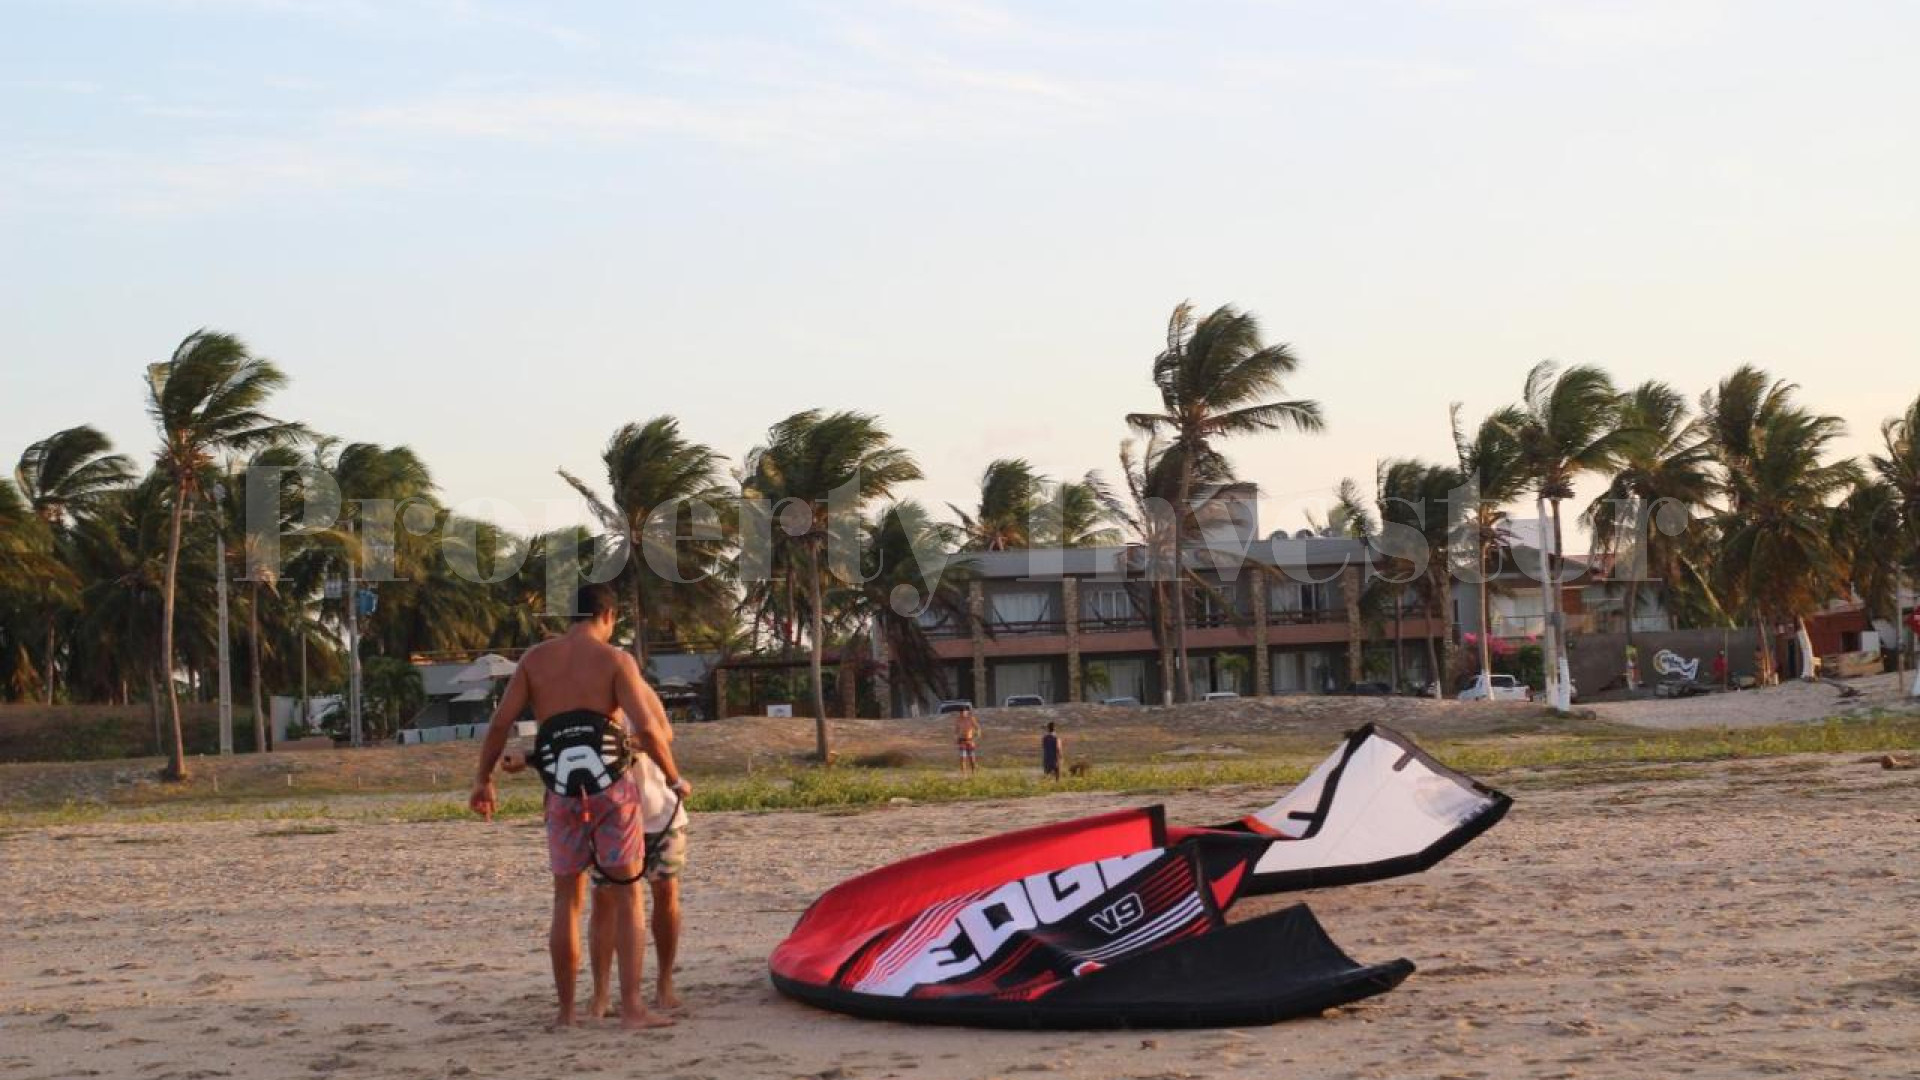 Popular 22 Suite Boutique Kite Surfing Hotel for Sale in Ilha de Guajirú, Brazil